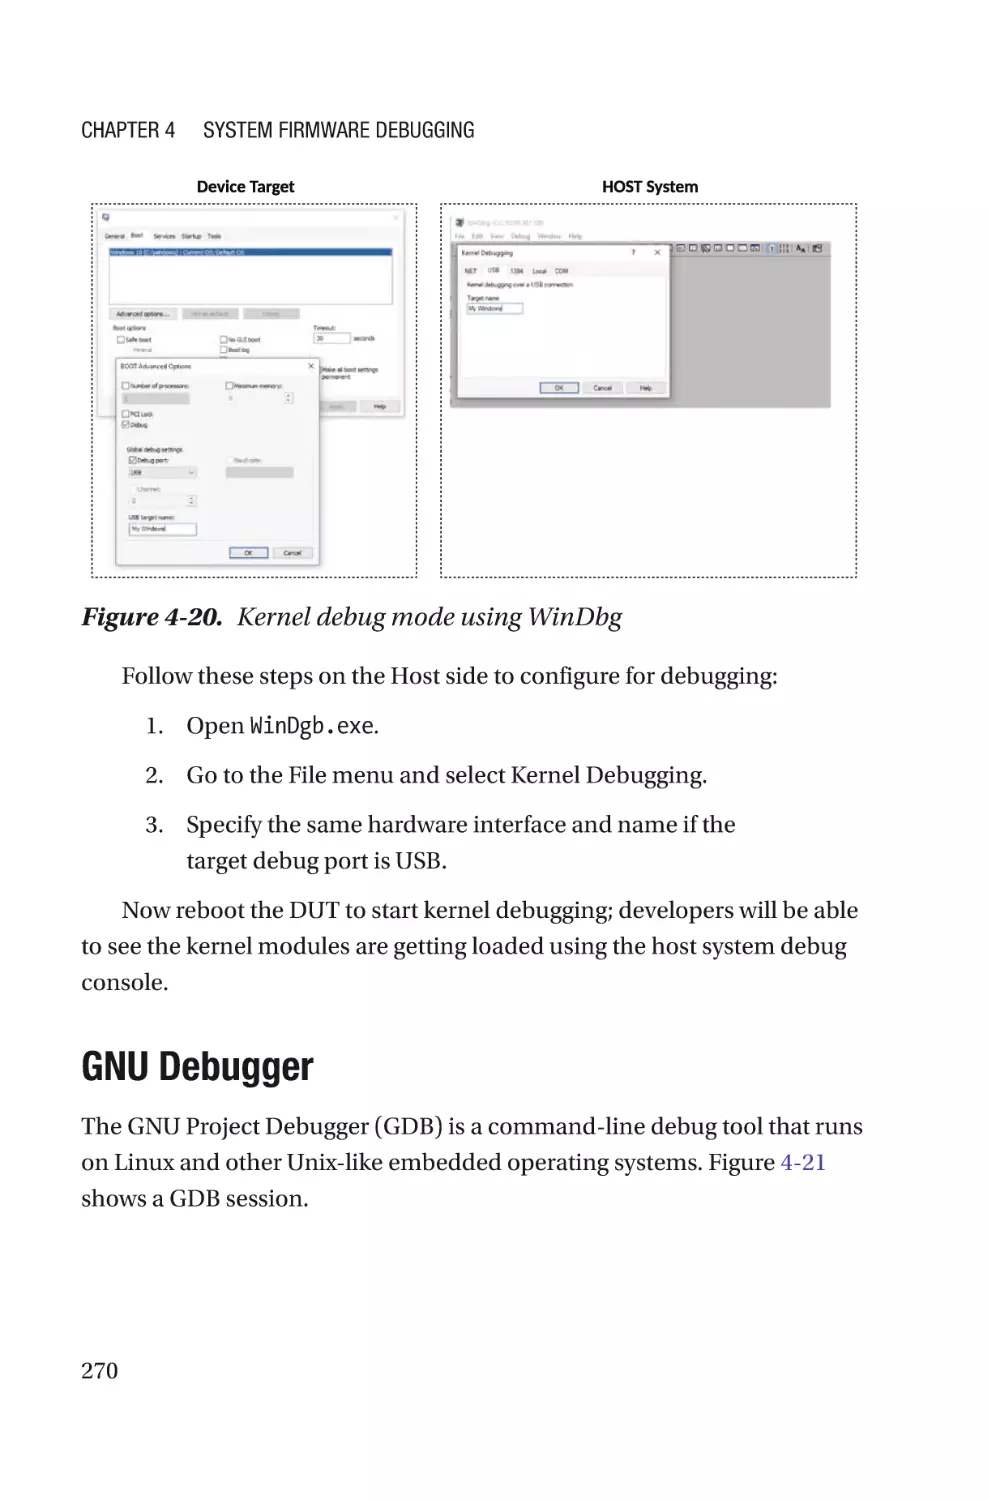 GNU Debugger